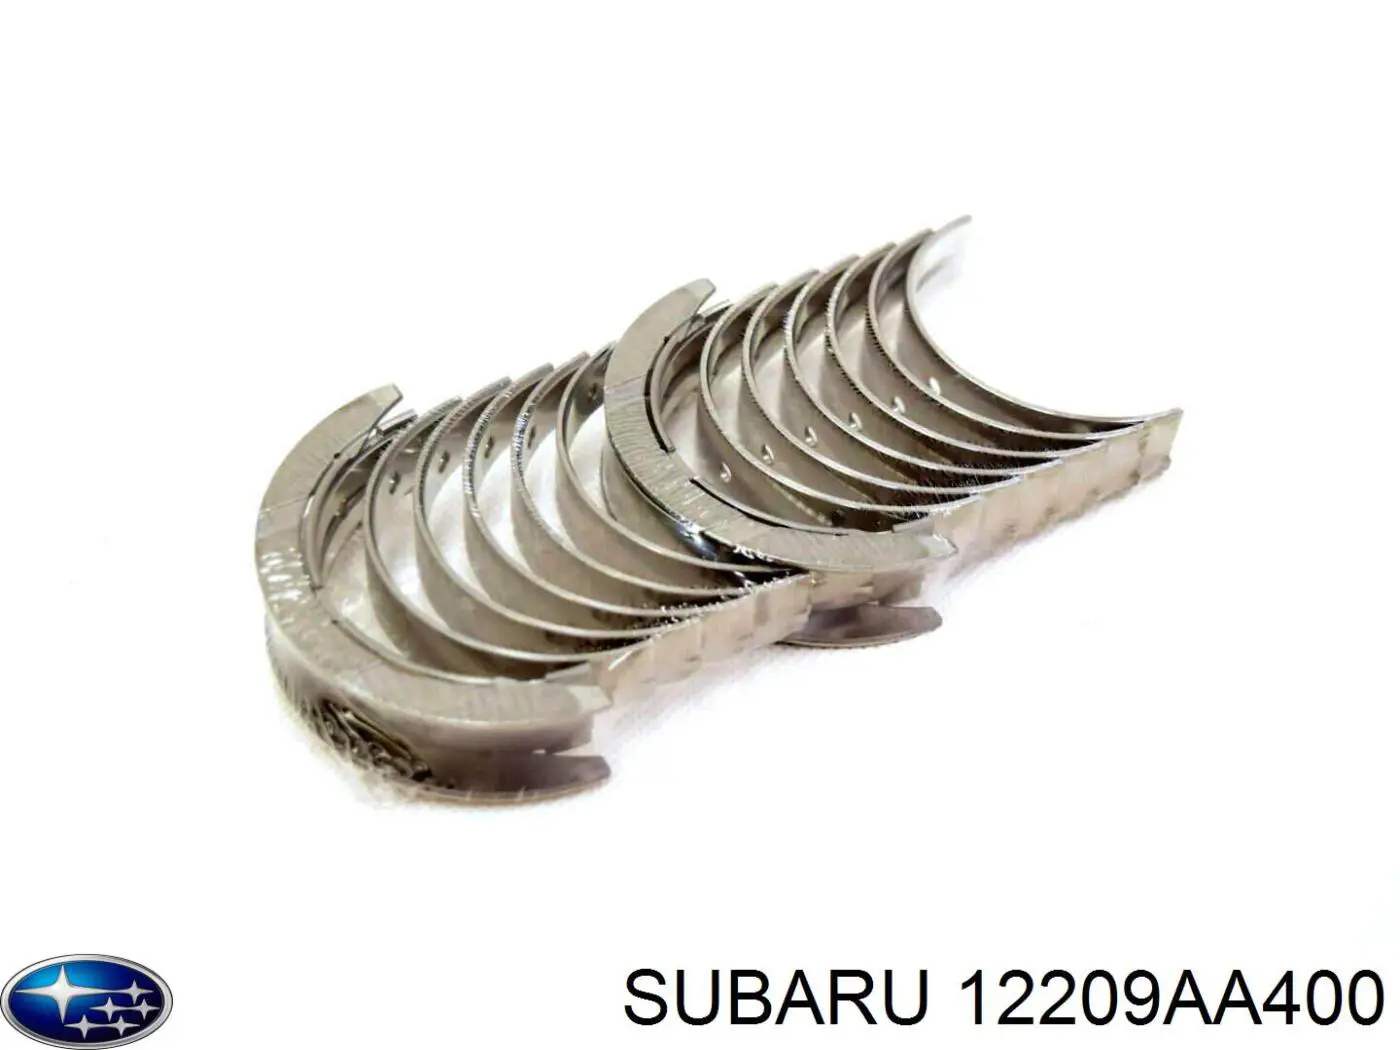 Вкладыши коленвала коренные, комплект, стандарт (STD) Subaru 12209AA400